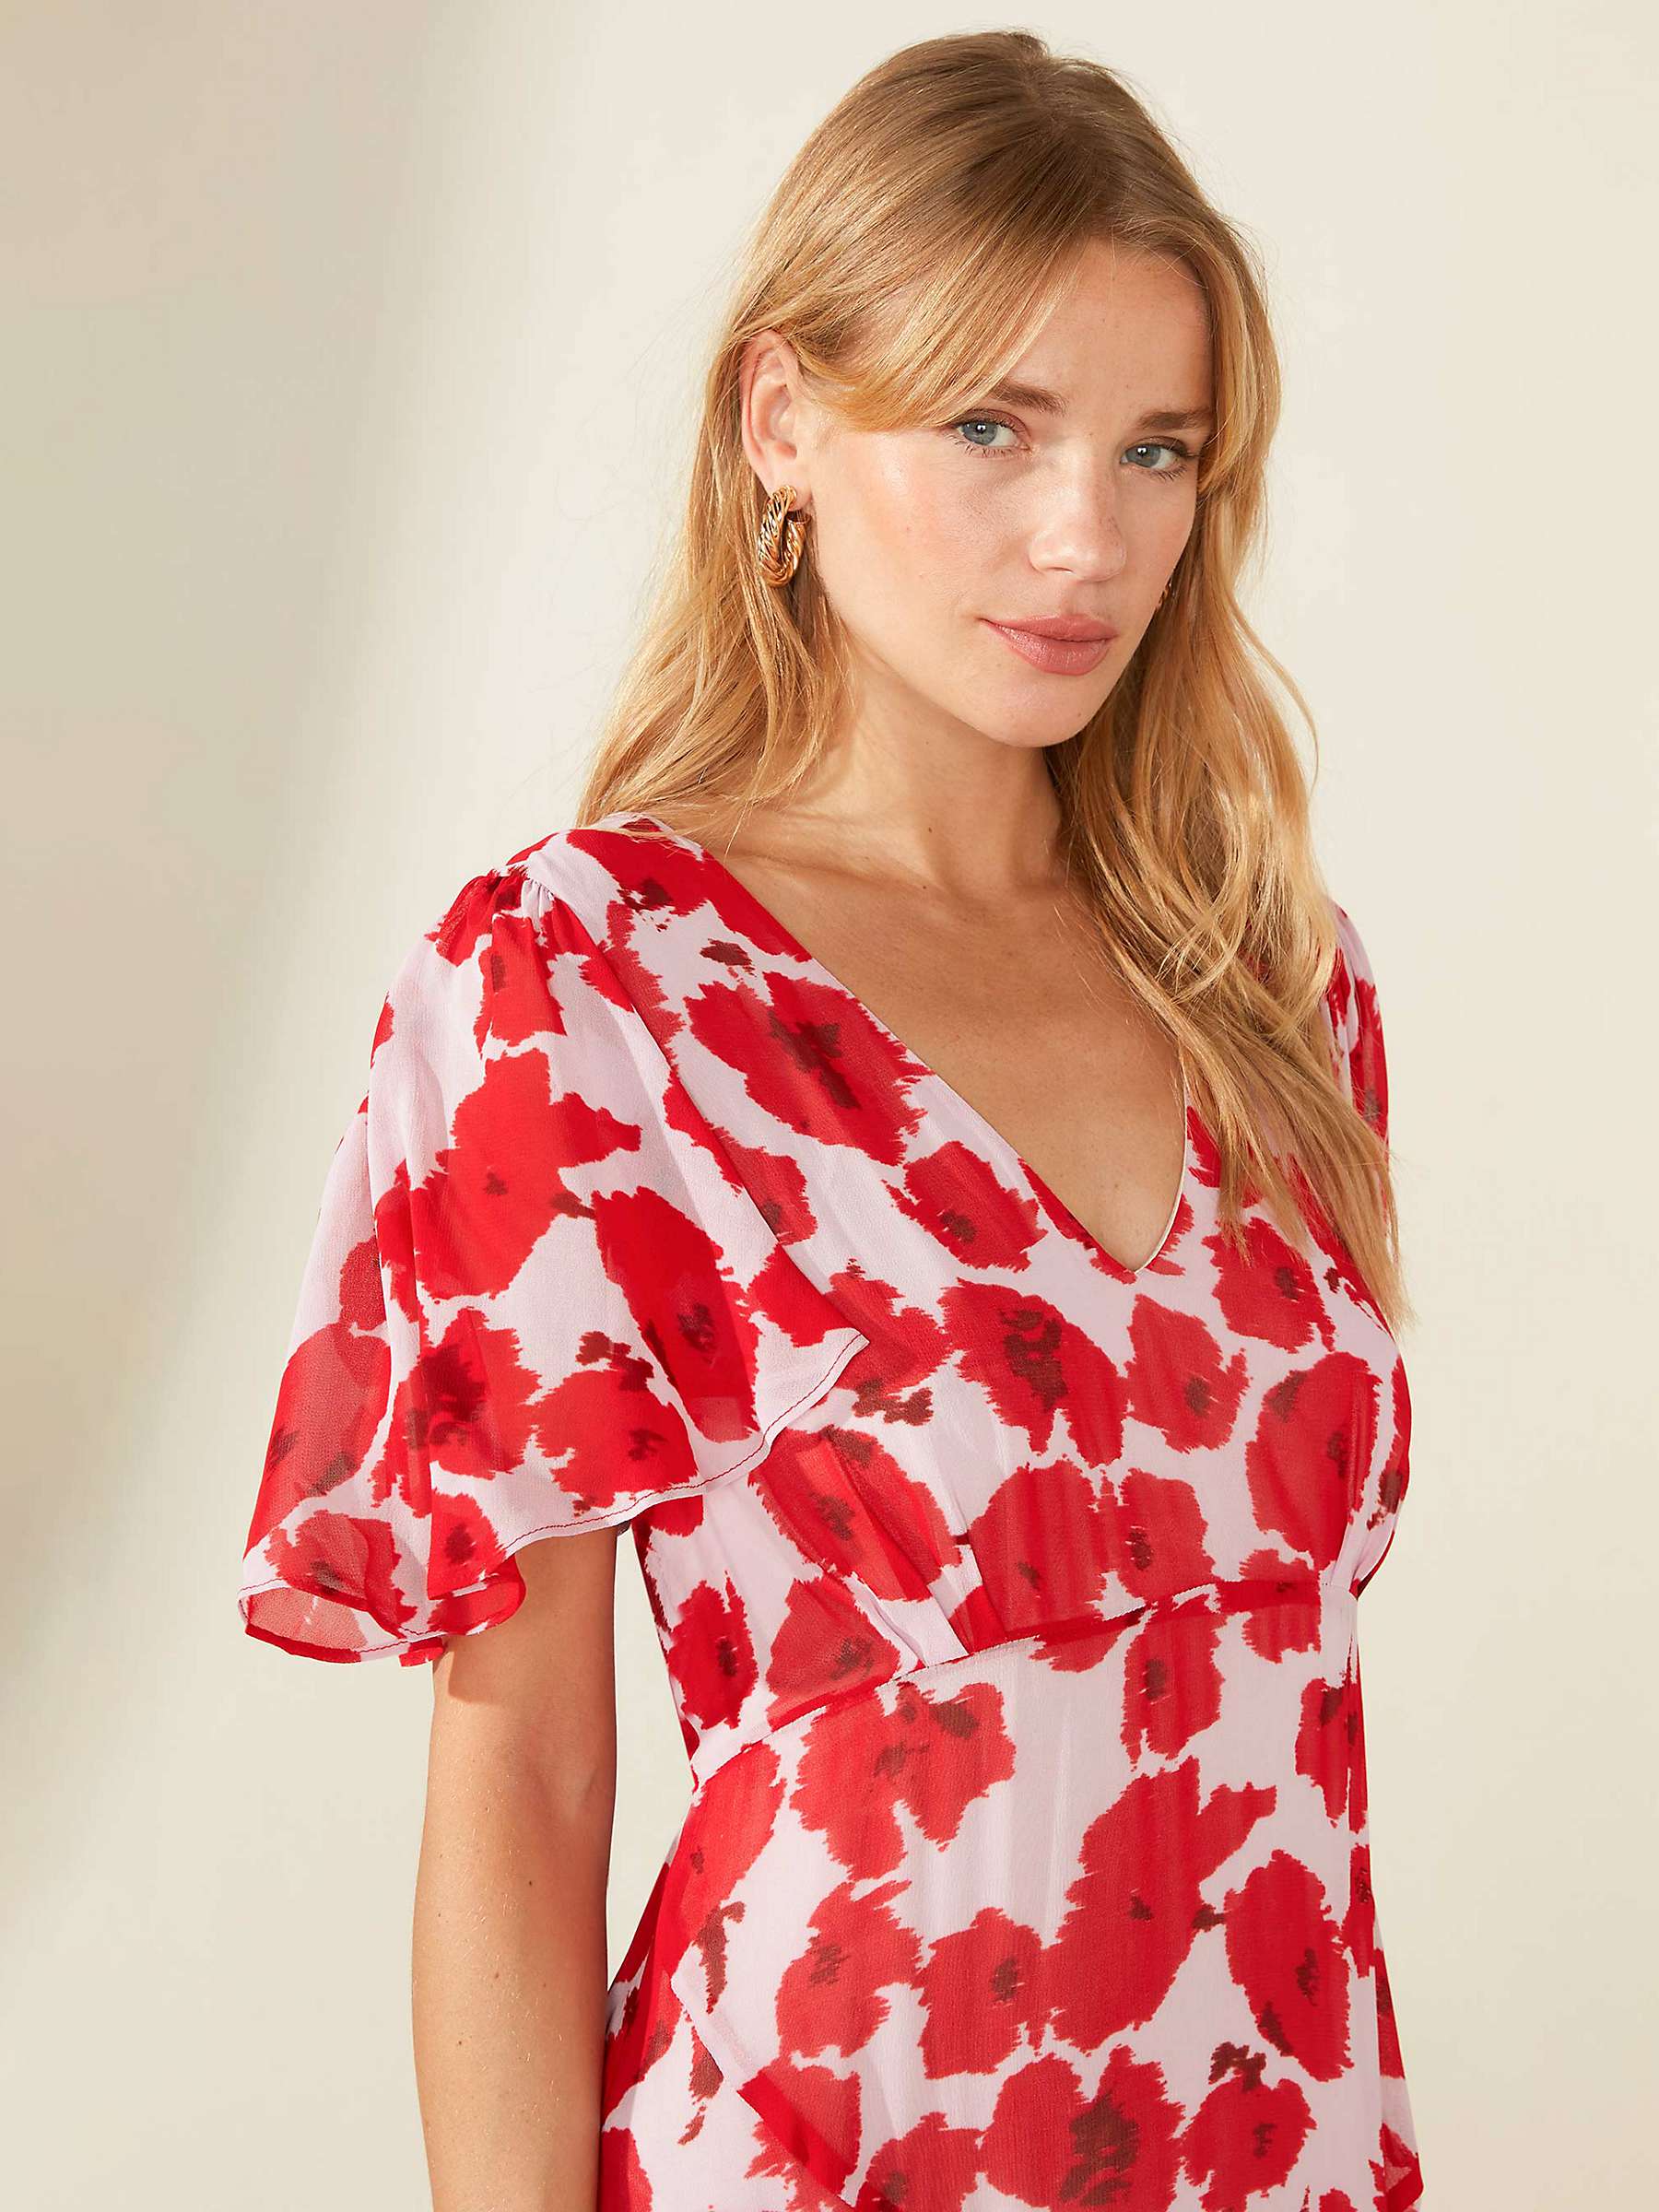 Buy Ro&Zo Daphne Floral Midi Dress, Pink/White Online at johnlewis.com